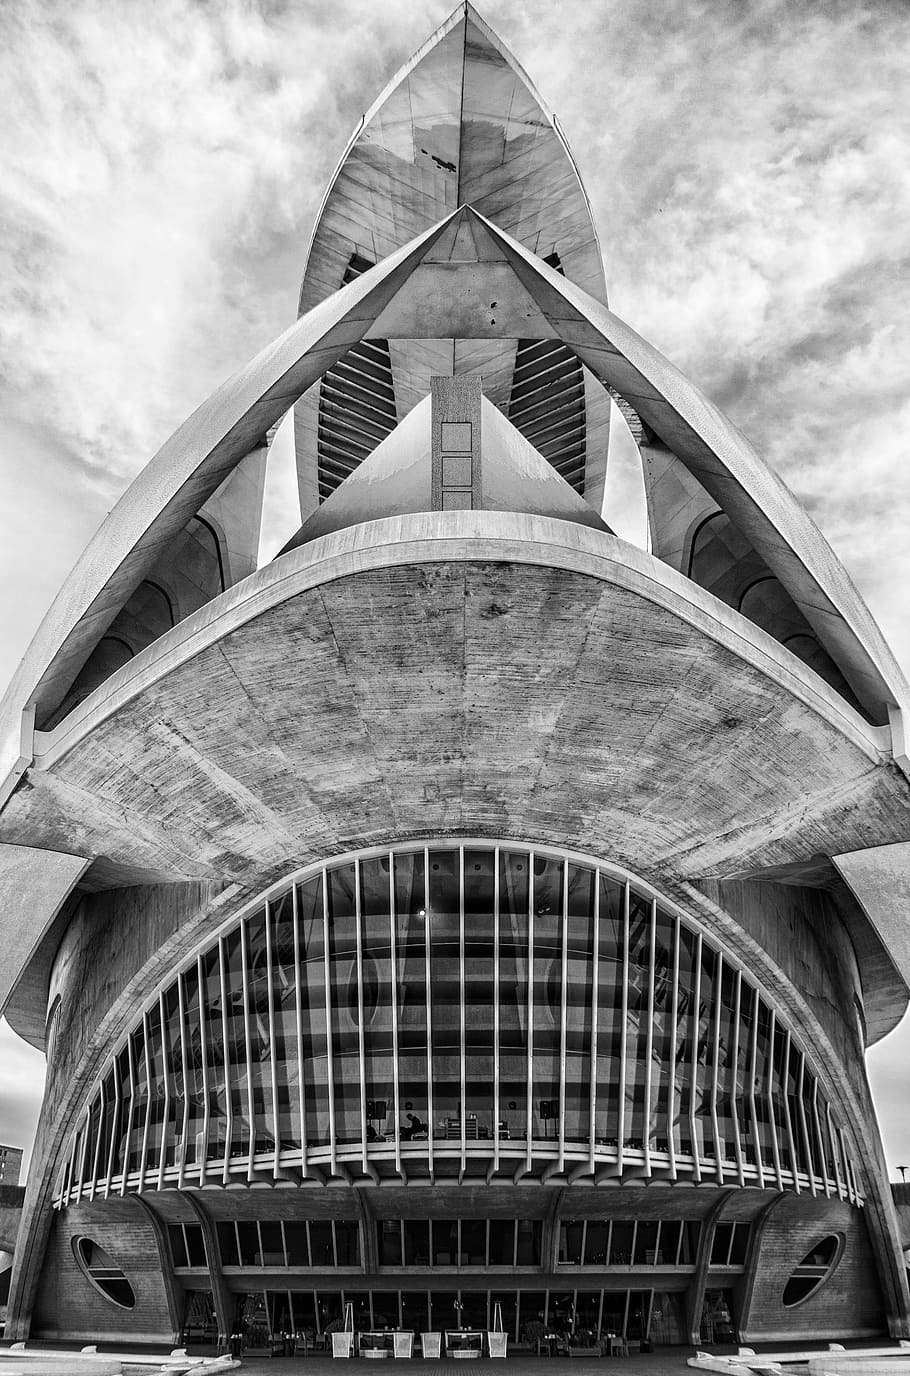 cac, city of sciences, calatrava, valencia, black and white, spain, monument, architecture, built structure, sky